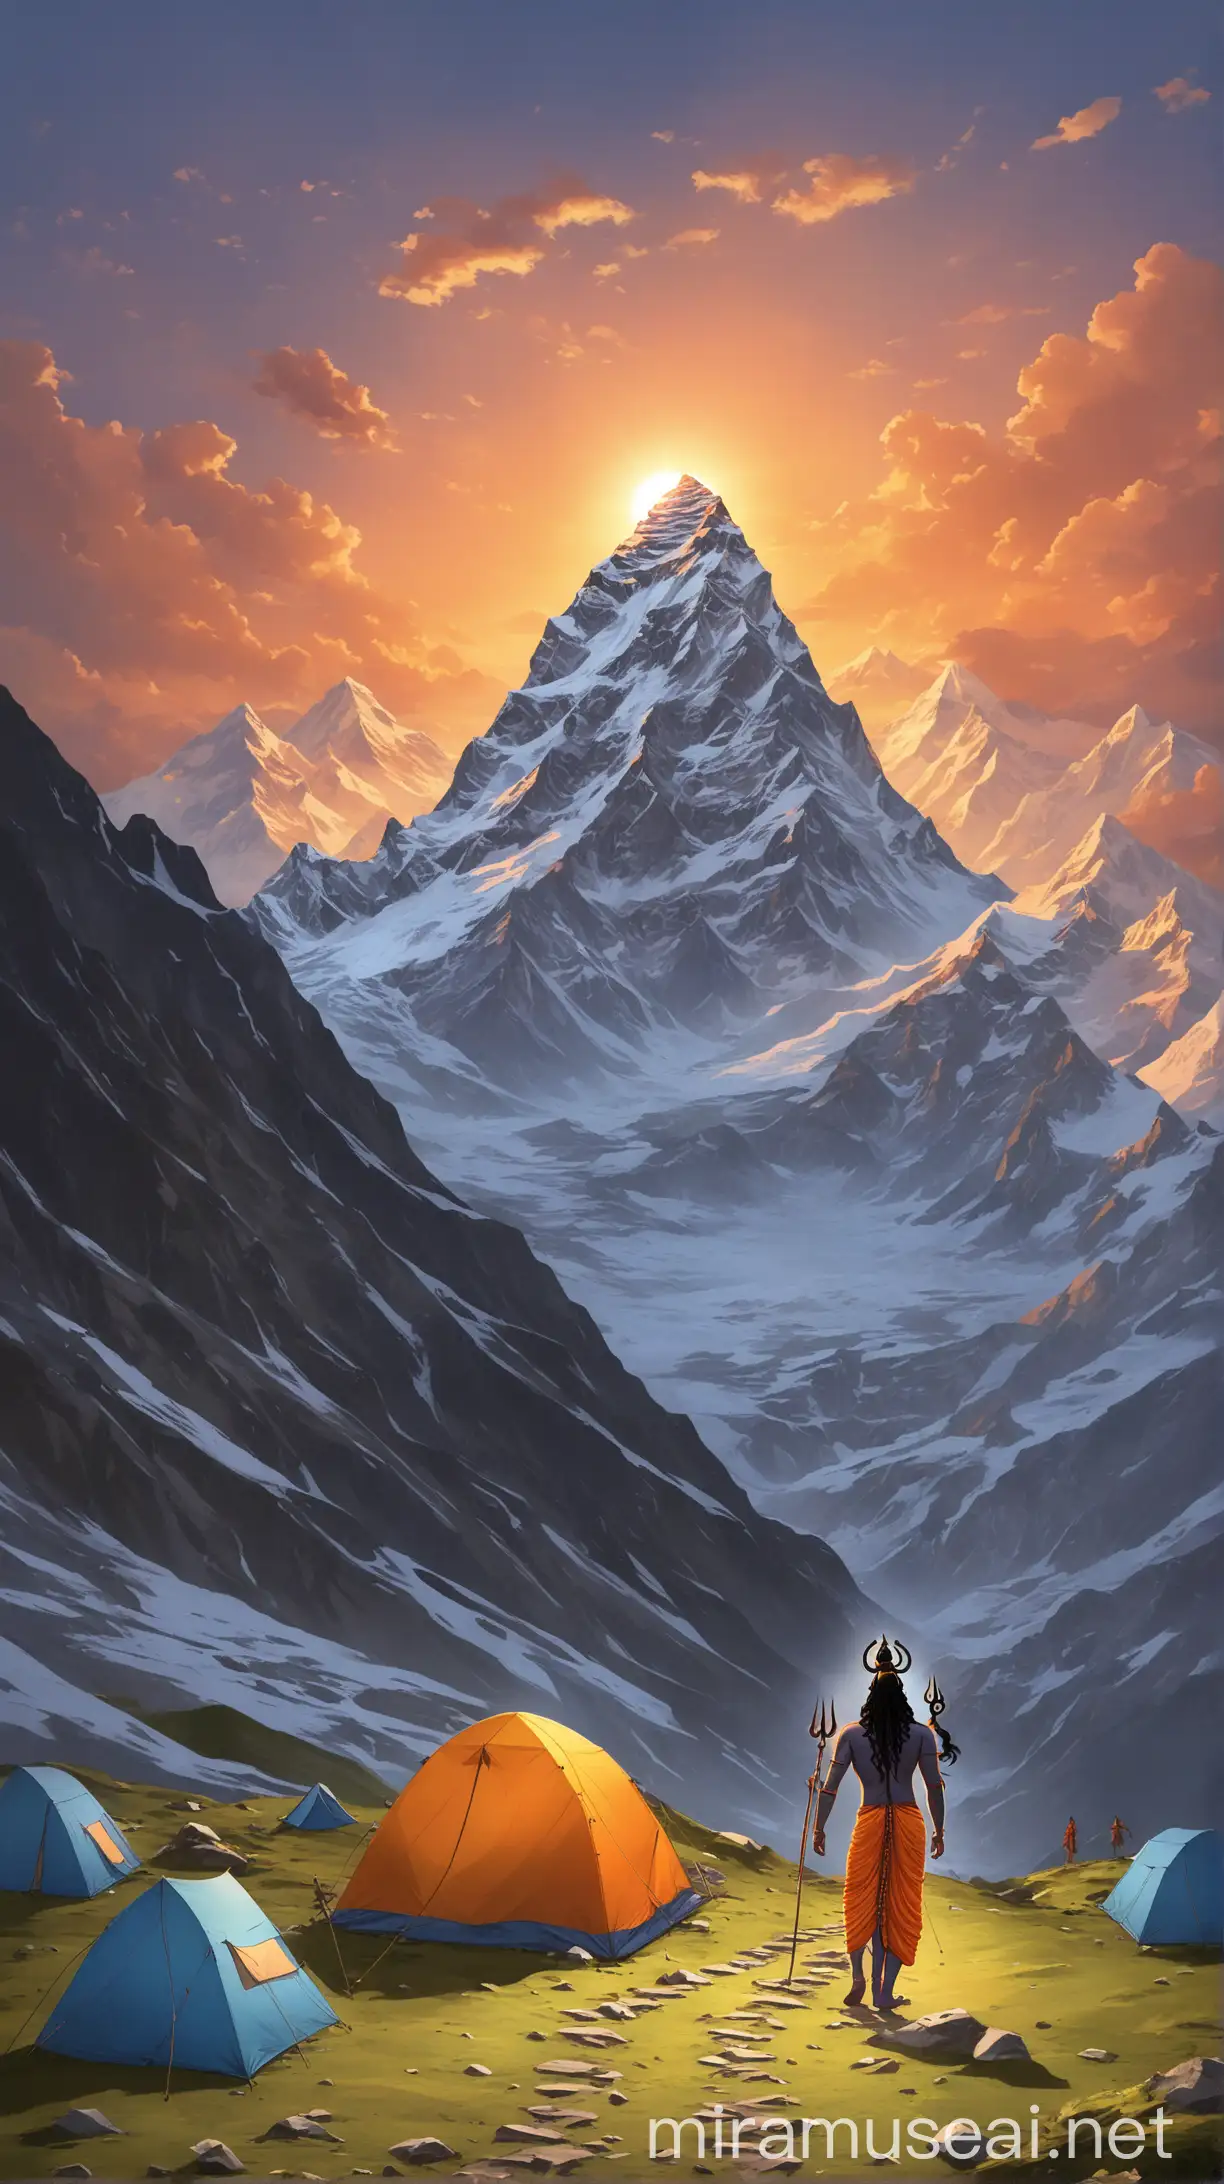 Lord Shiva Walking on Mountain Base Camp at Sunset amidst Verdant Greenery